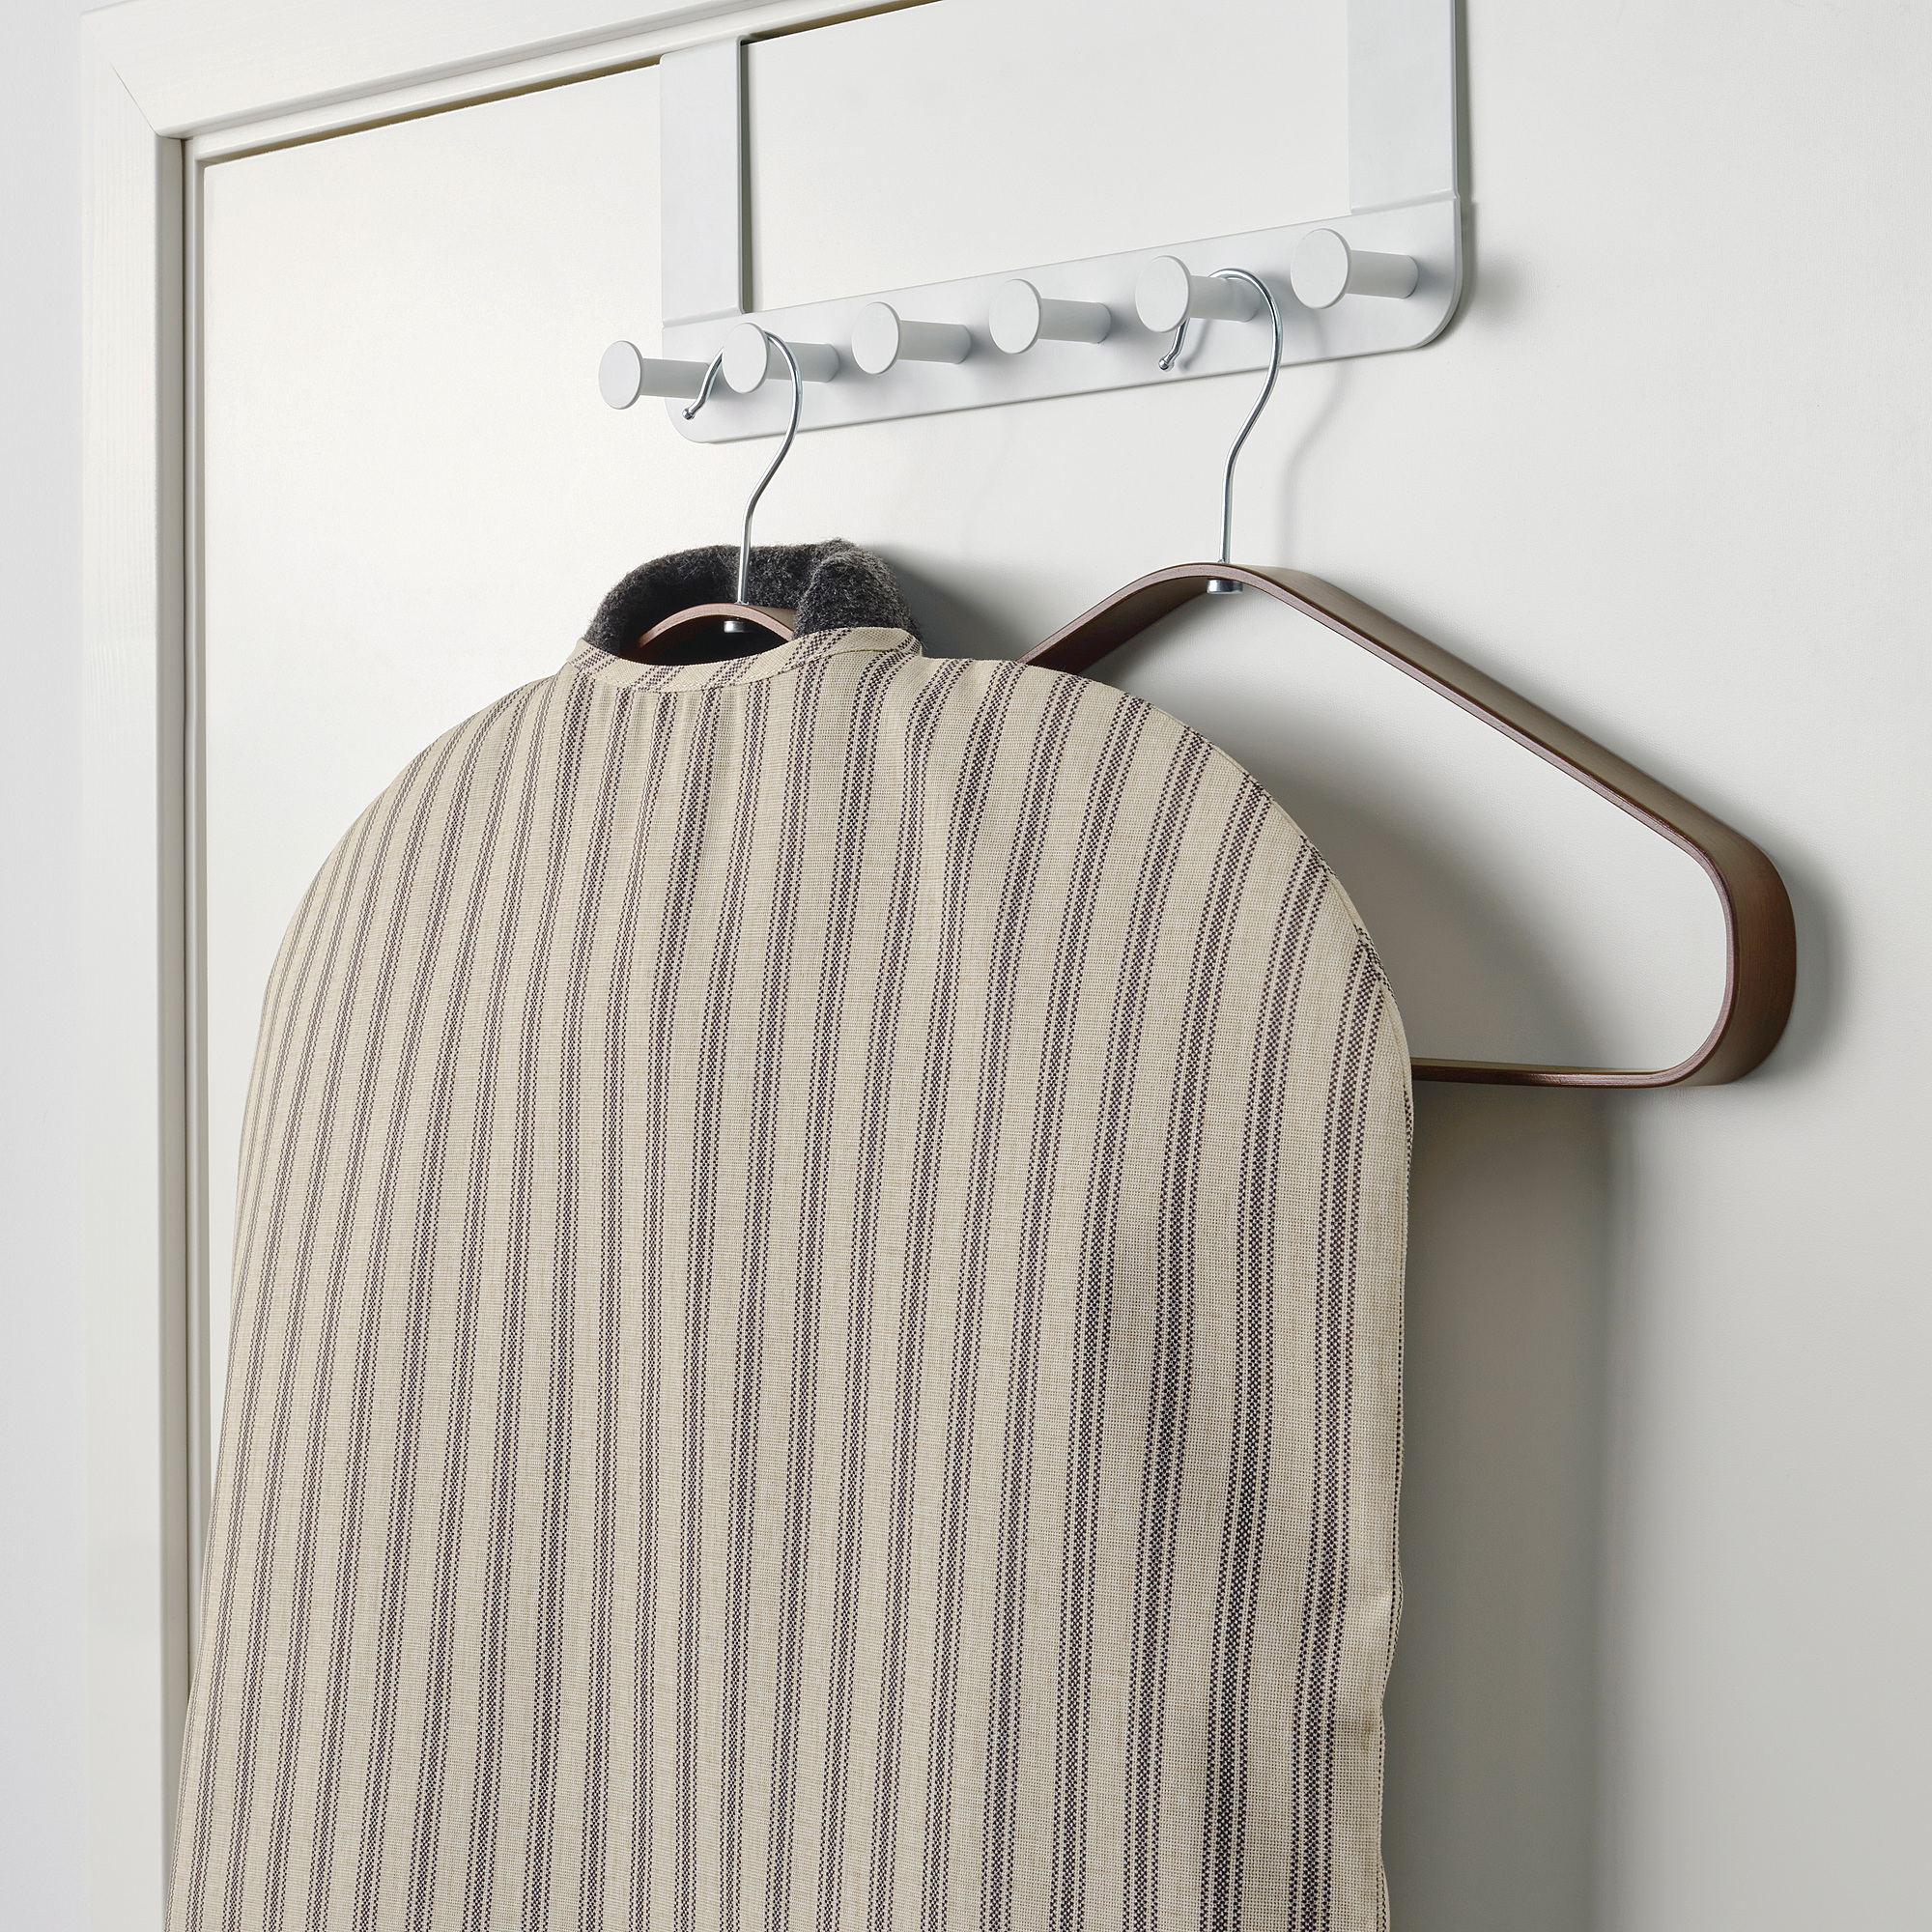 RÅGODLING coat hanger